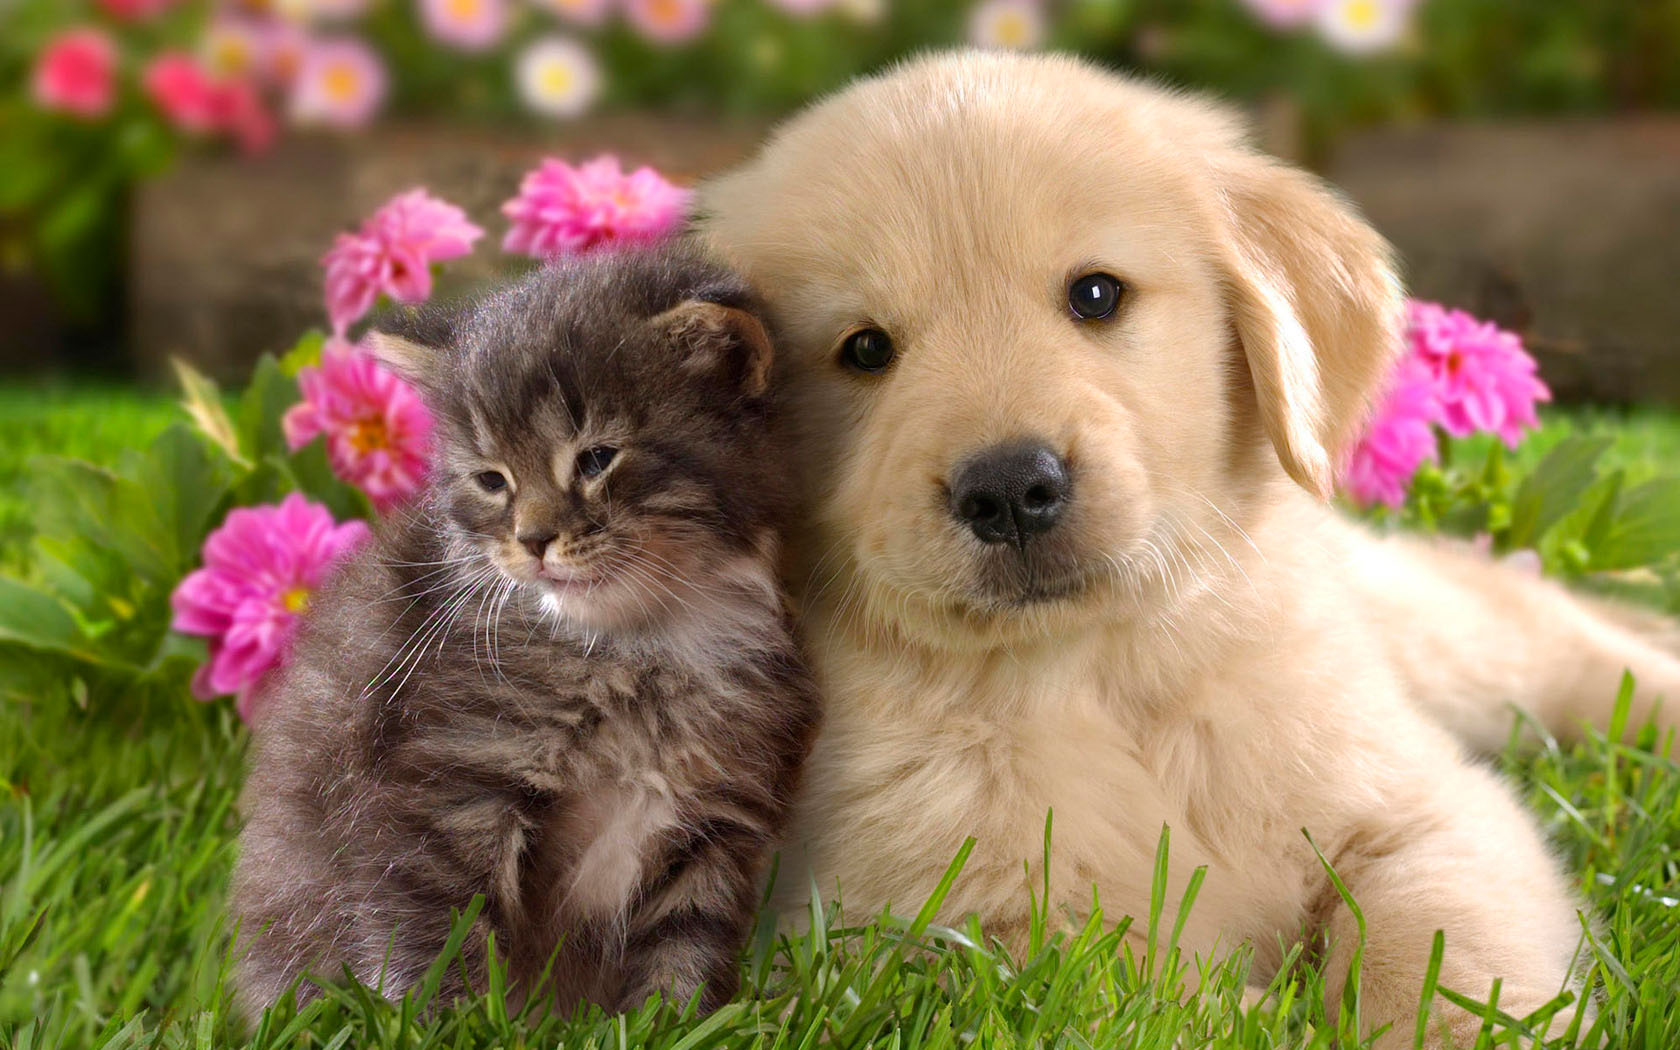 Puppy and kitten desktop background picture